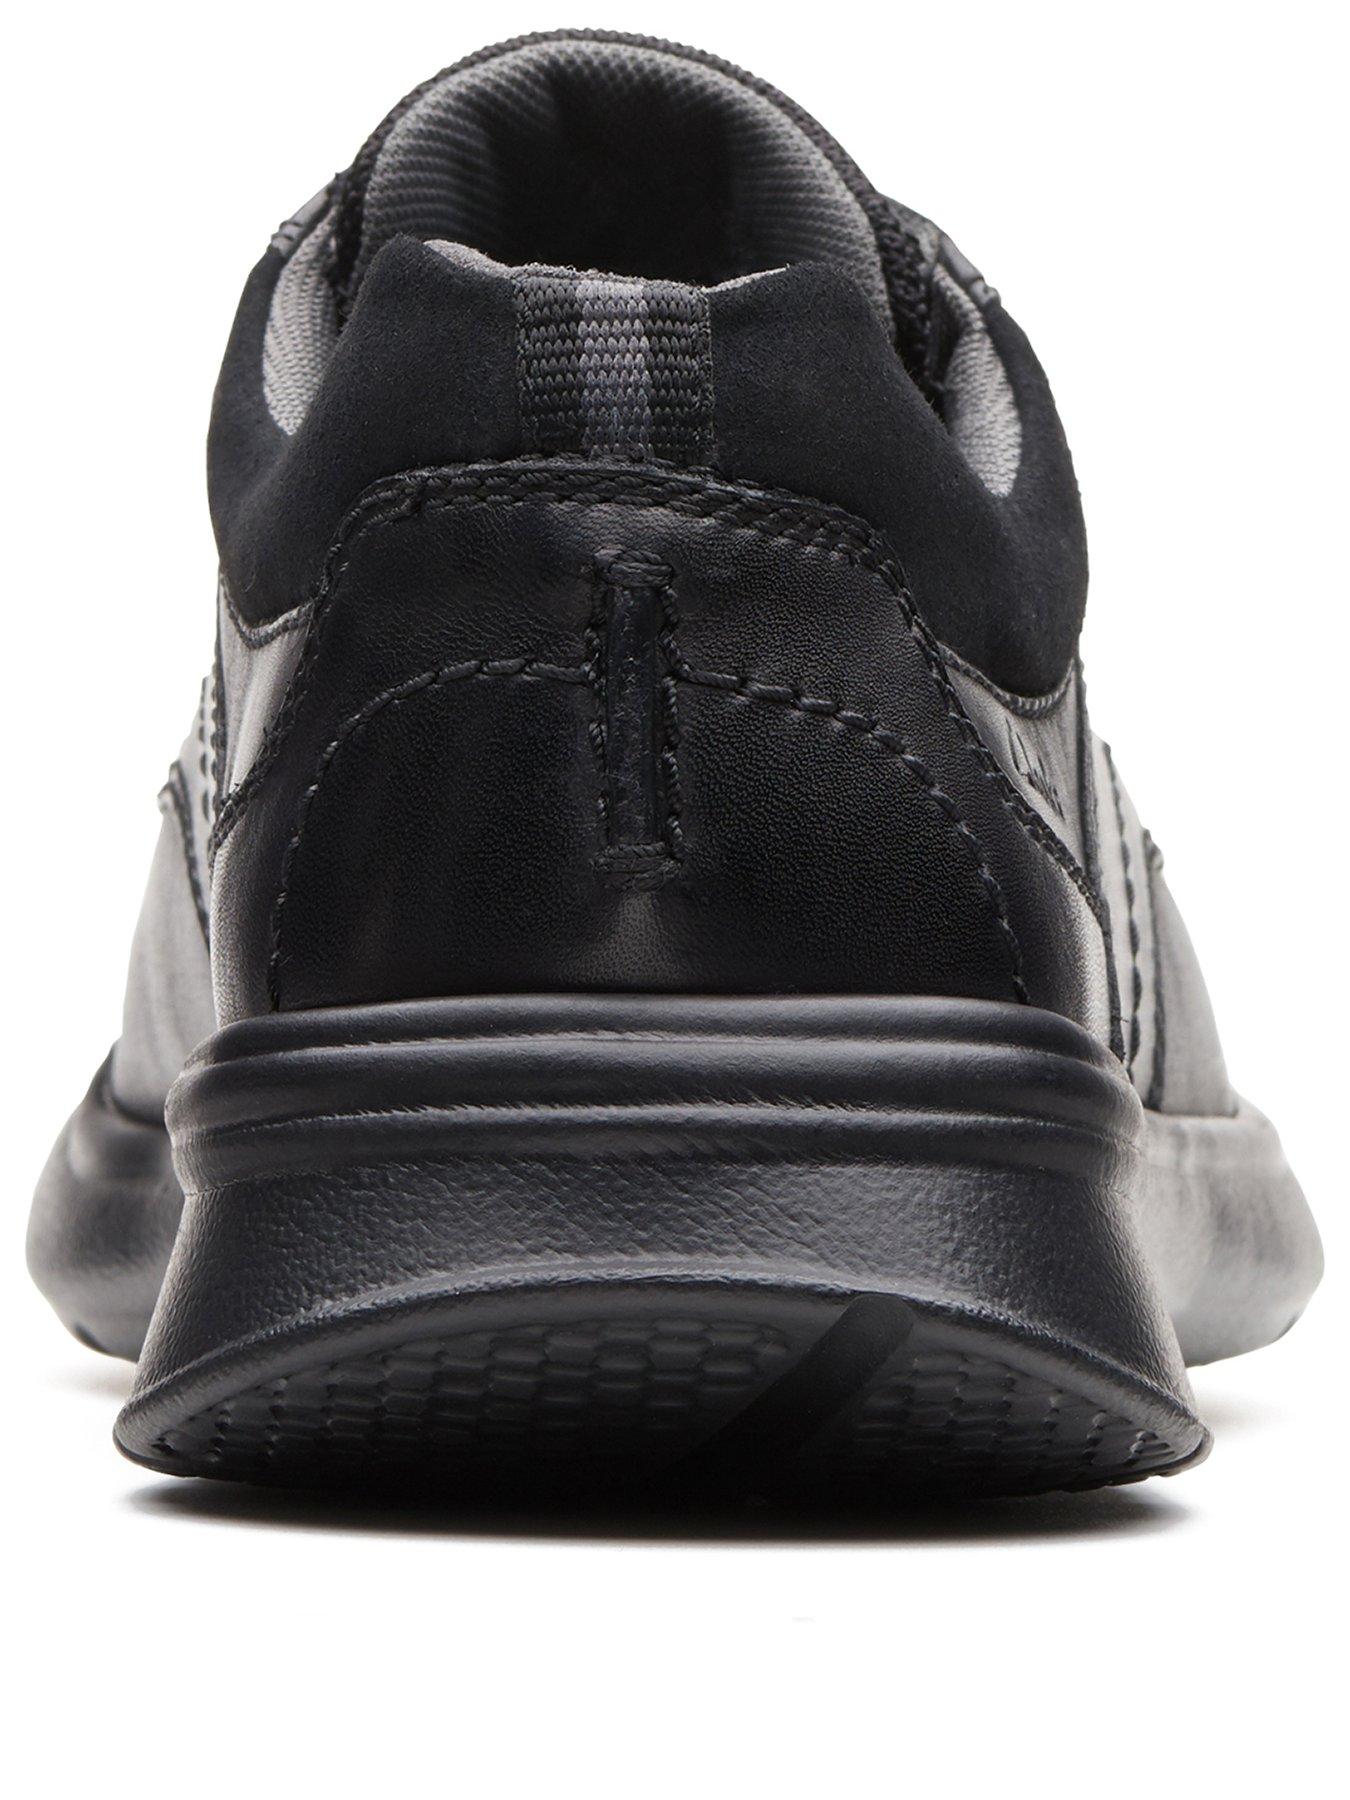 Clarks Cotrell Edge Wide Fit Shoes - Black | littlewoods.com